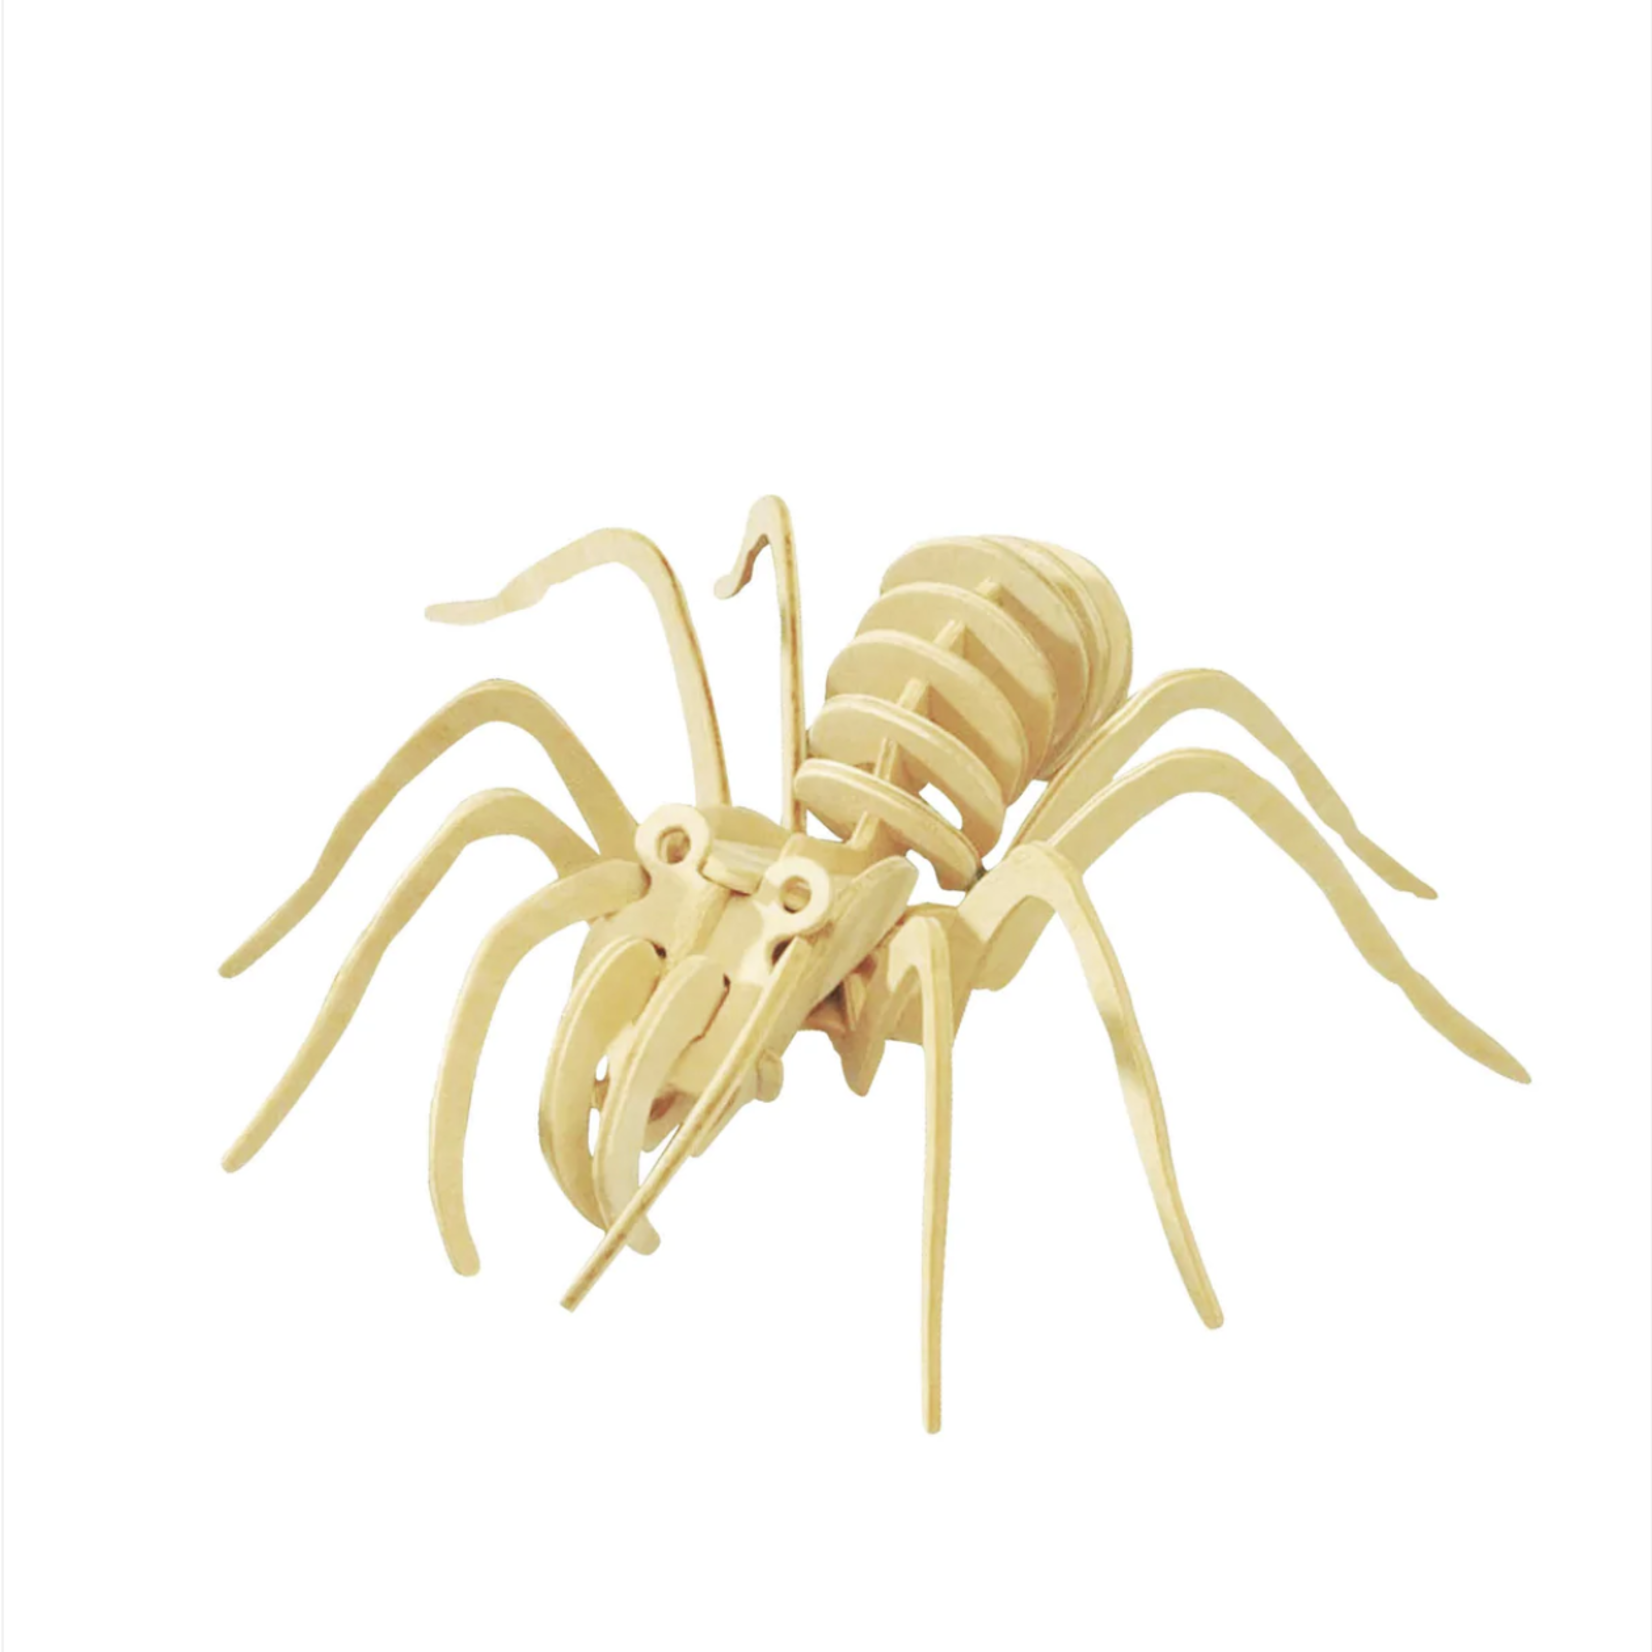 HANDS CRAFT DIY 3D WOODEN PUZZLE SPIDER